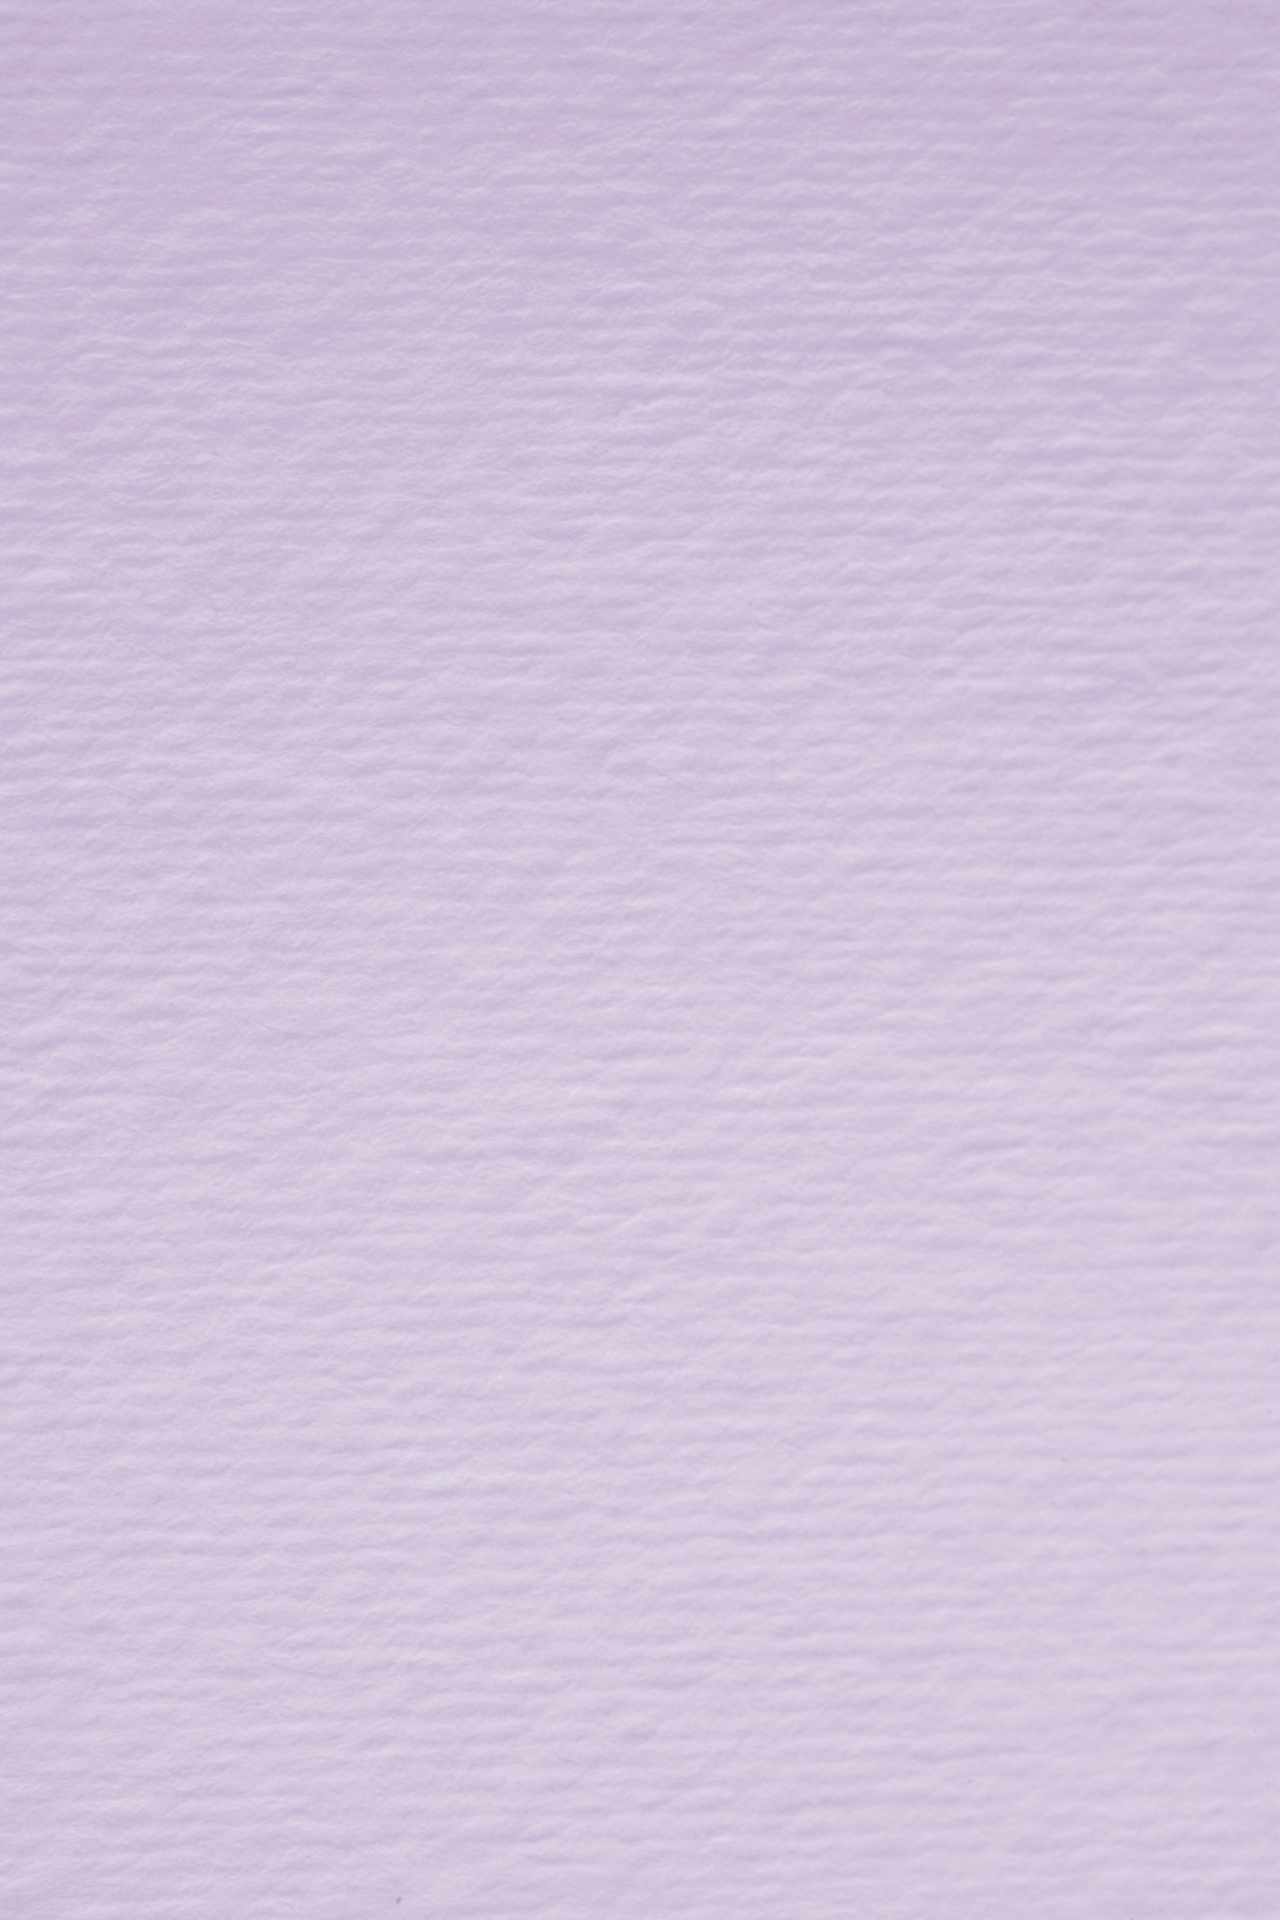 paper texture lavender free photo